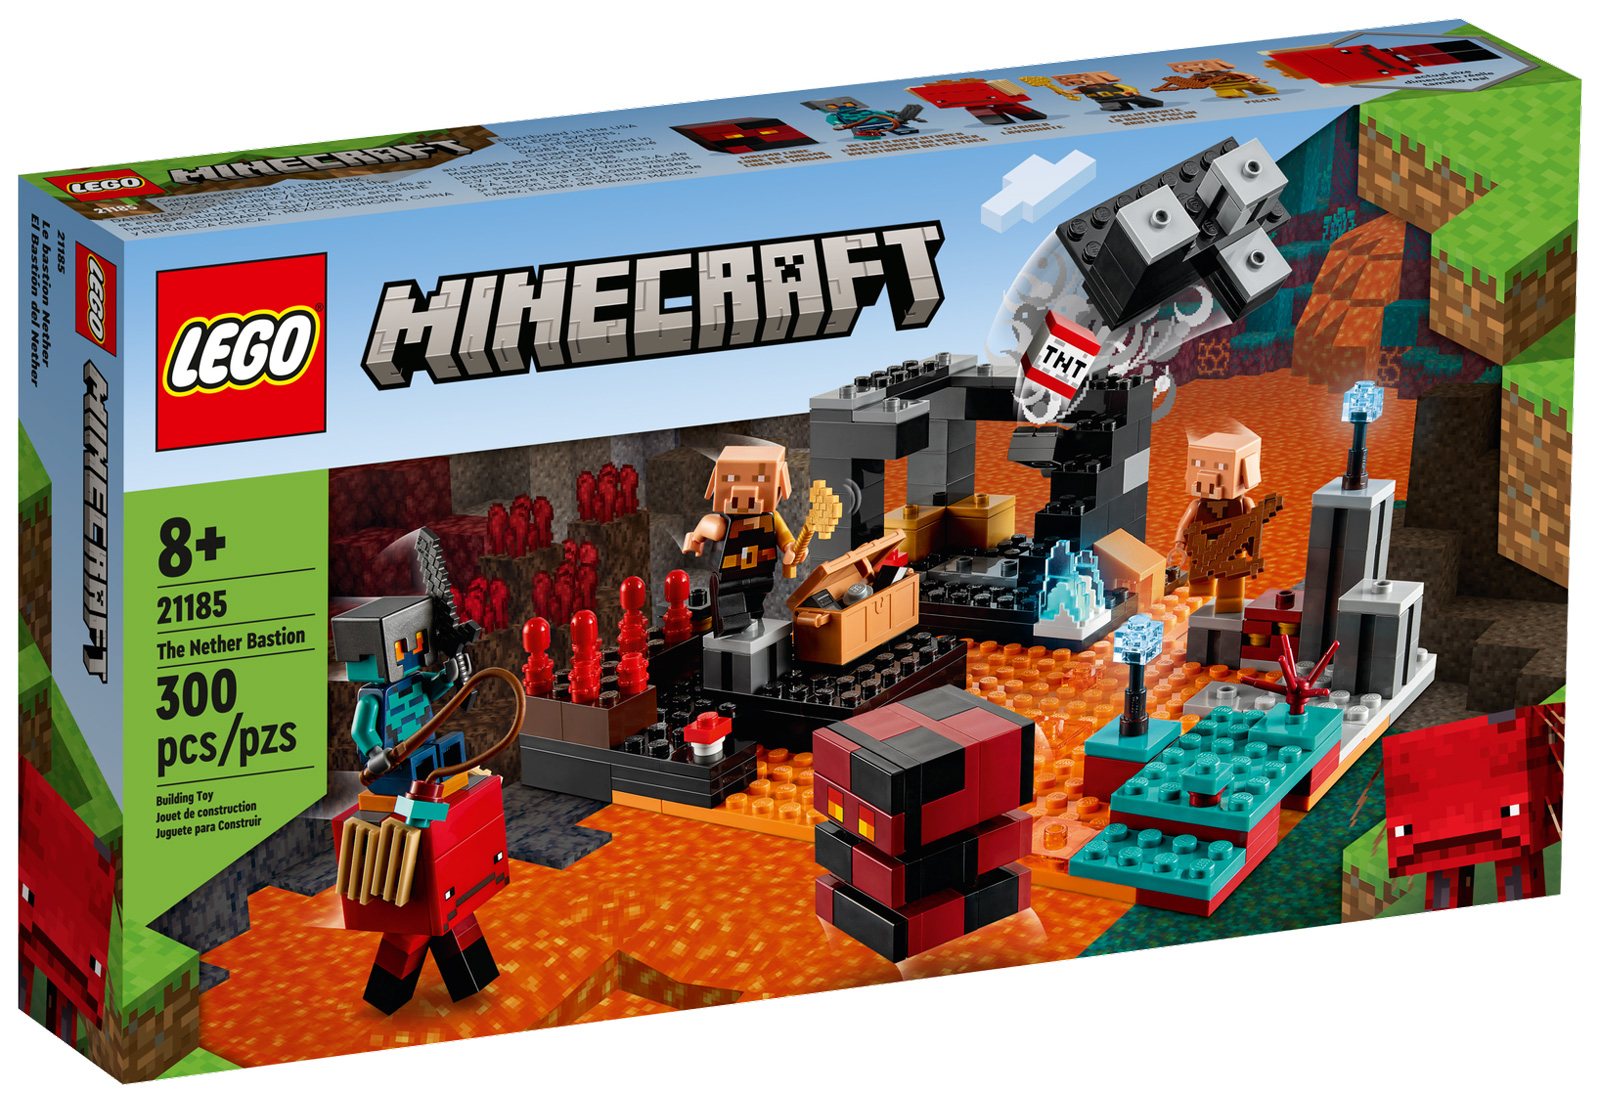 LEGO Minecraft 21185 pas cher, Le bastion du Nether